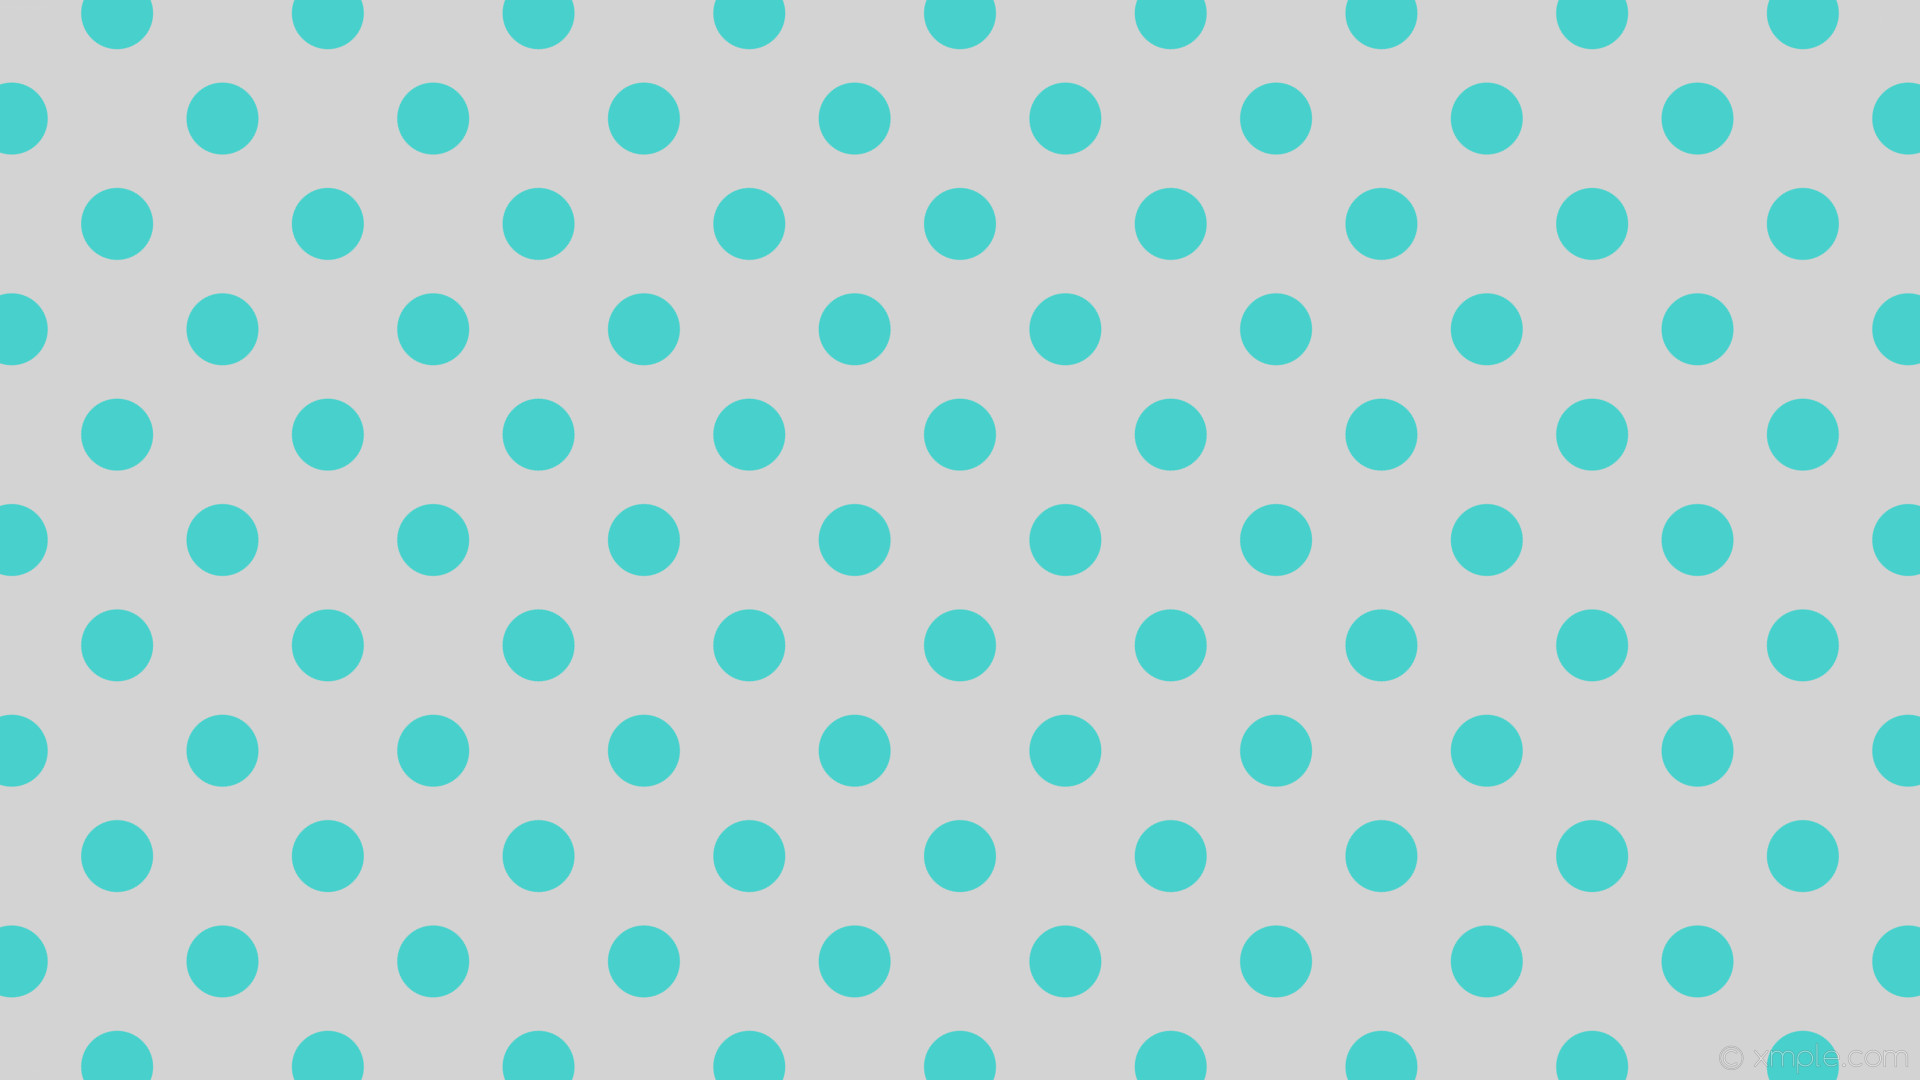 1920x1080 wallpaper grey spots dots polka blue light gray medium turquoise #d3d3d3  #48d1cc 45Â°